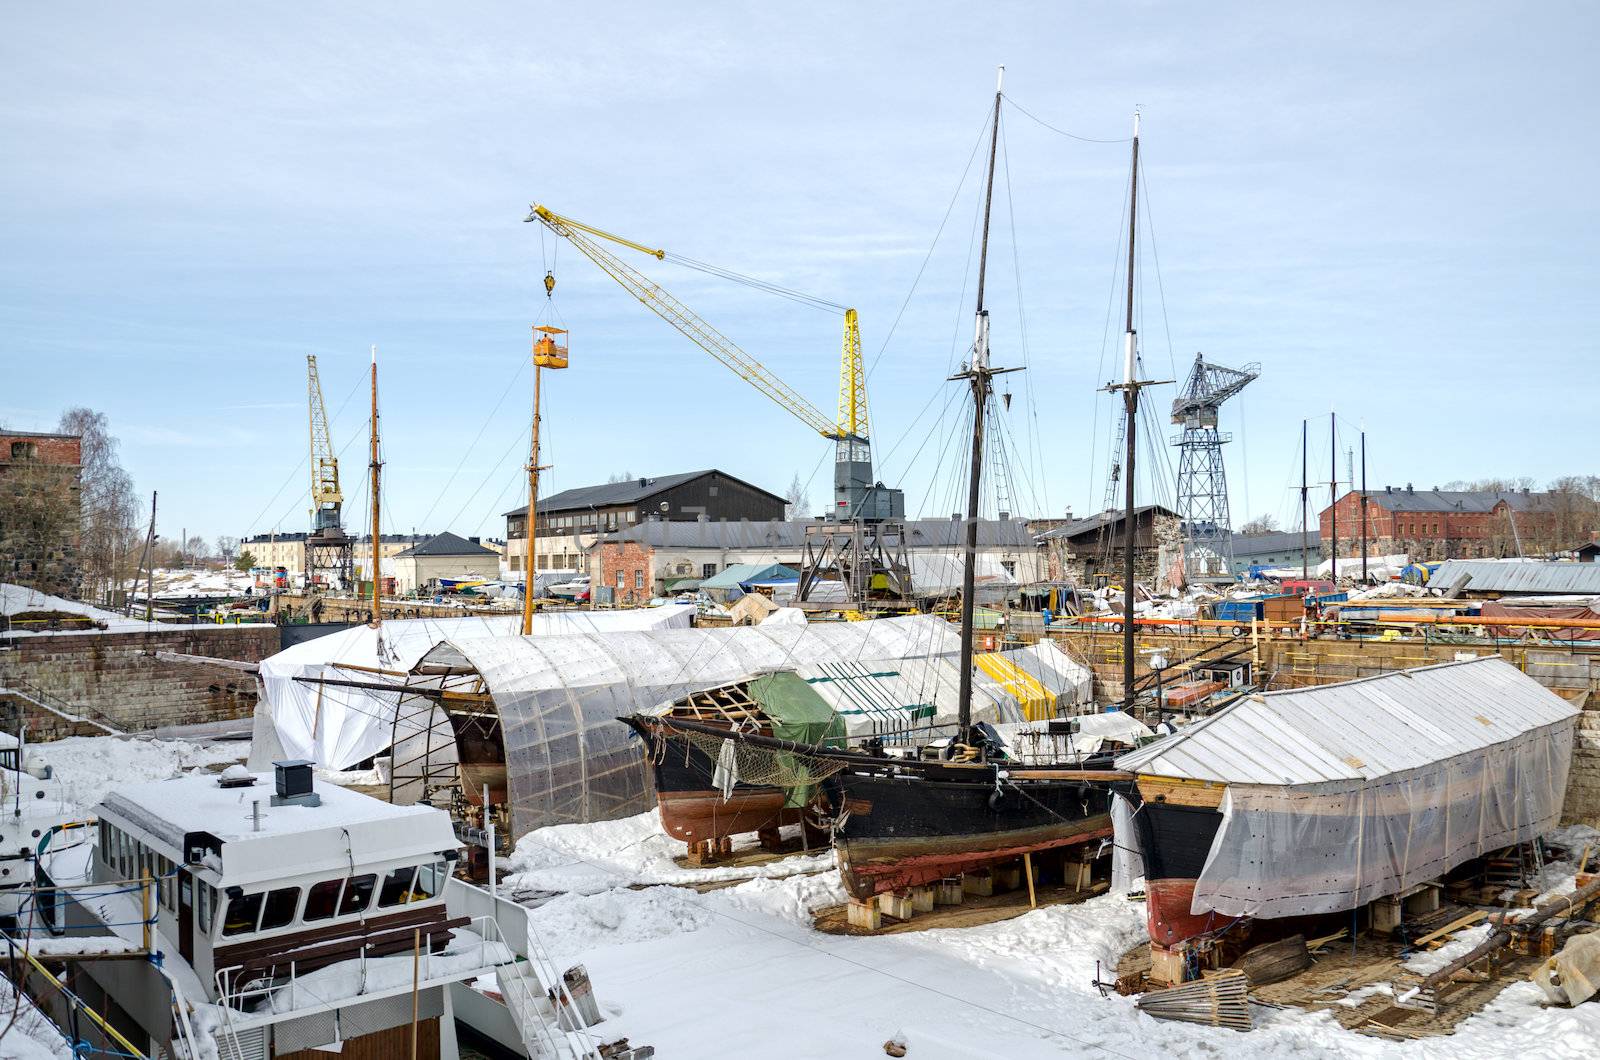 Boats in the drydock. Suomenlinna, Finland